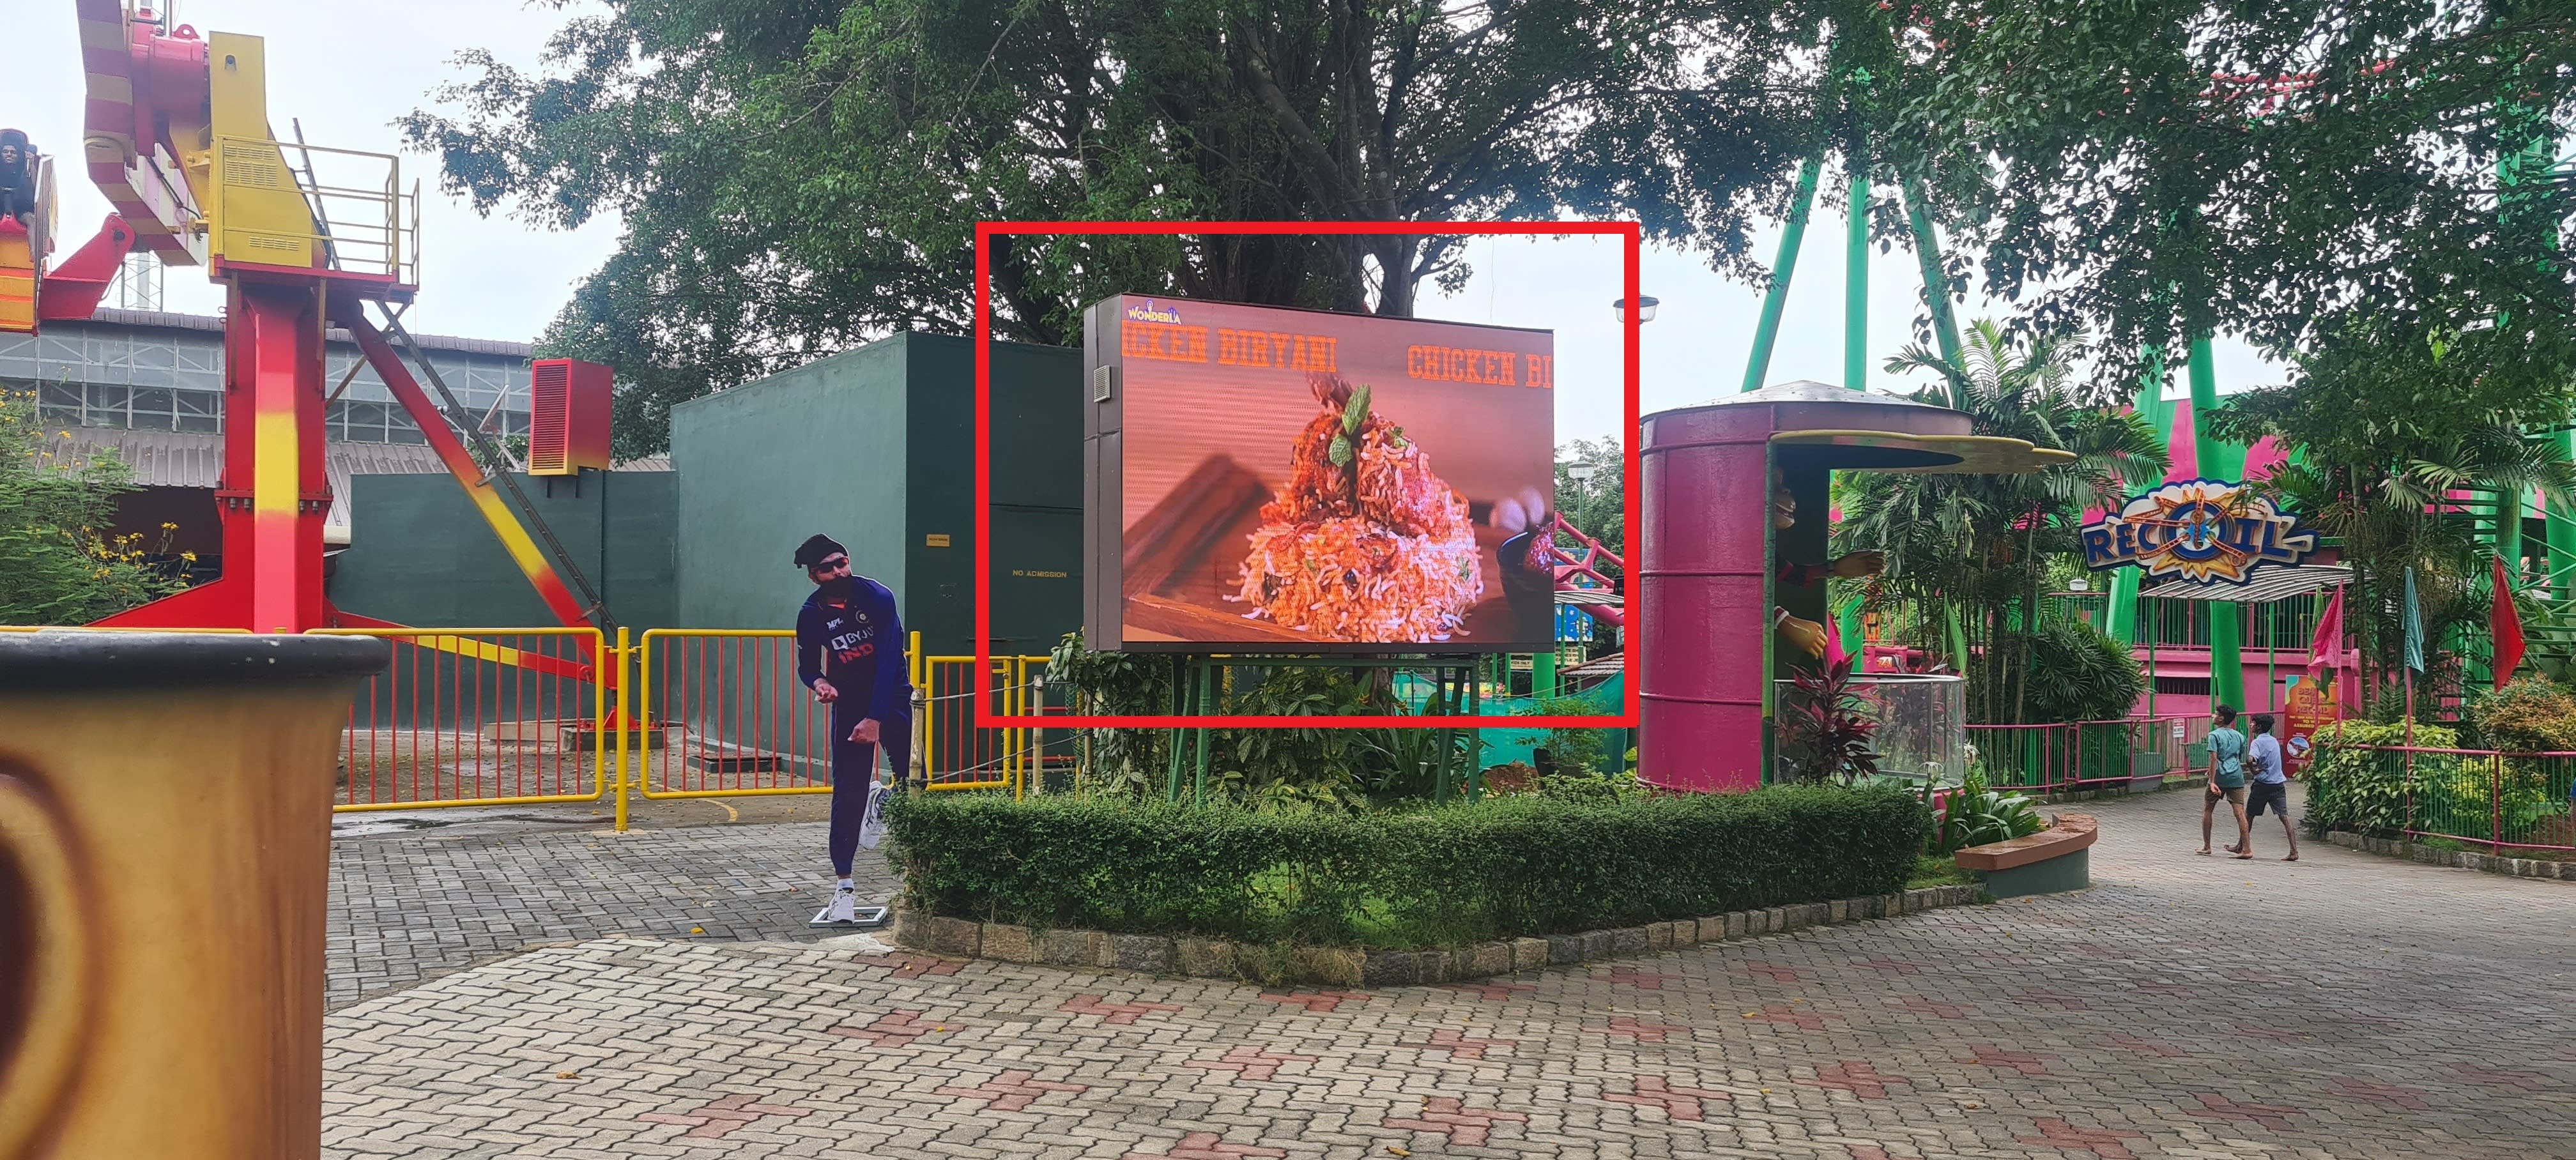 Large Digital Display - Bangalore